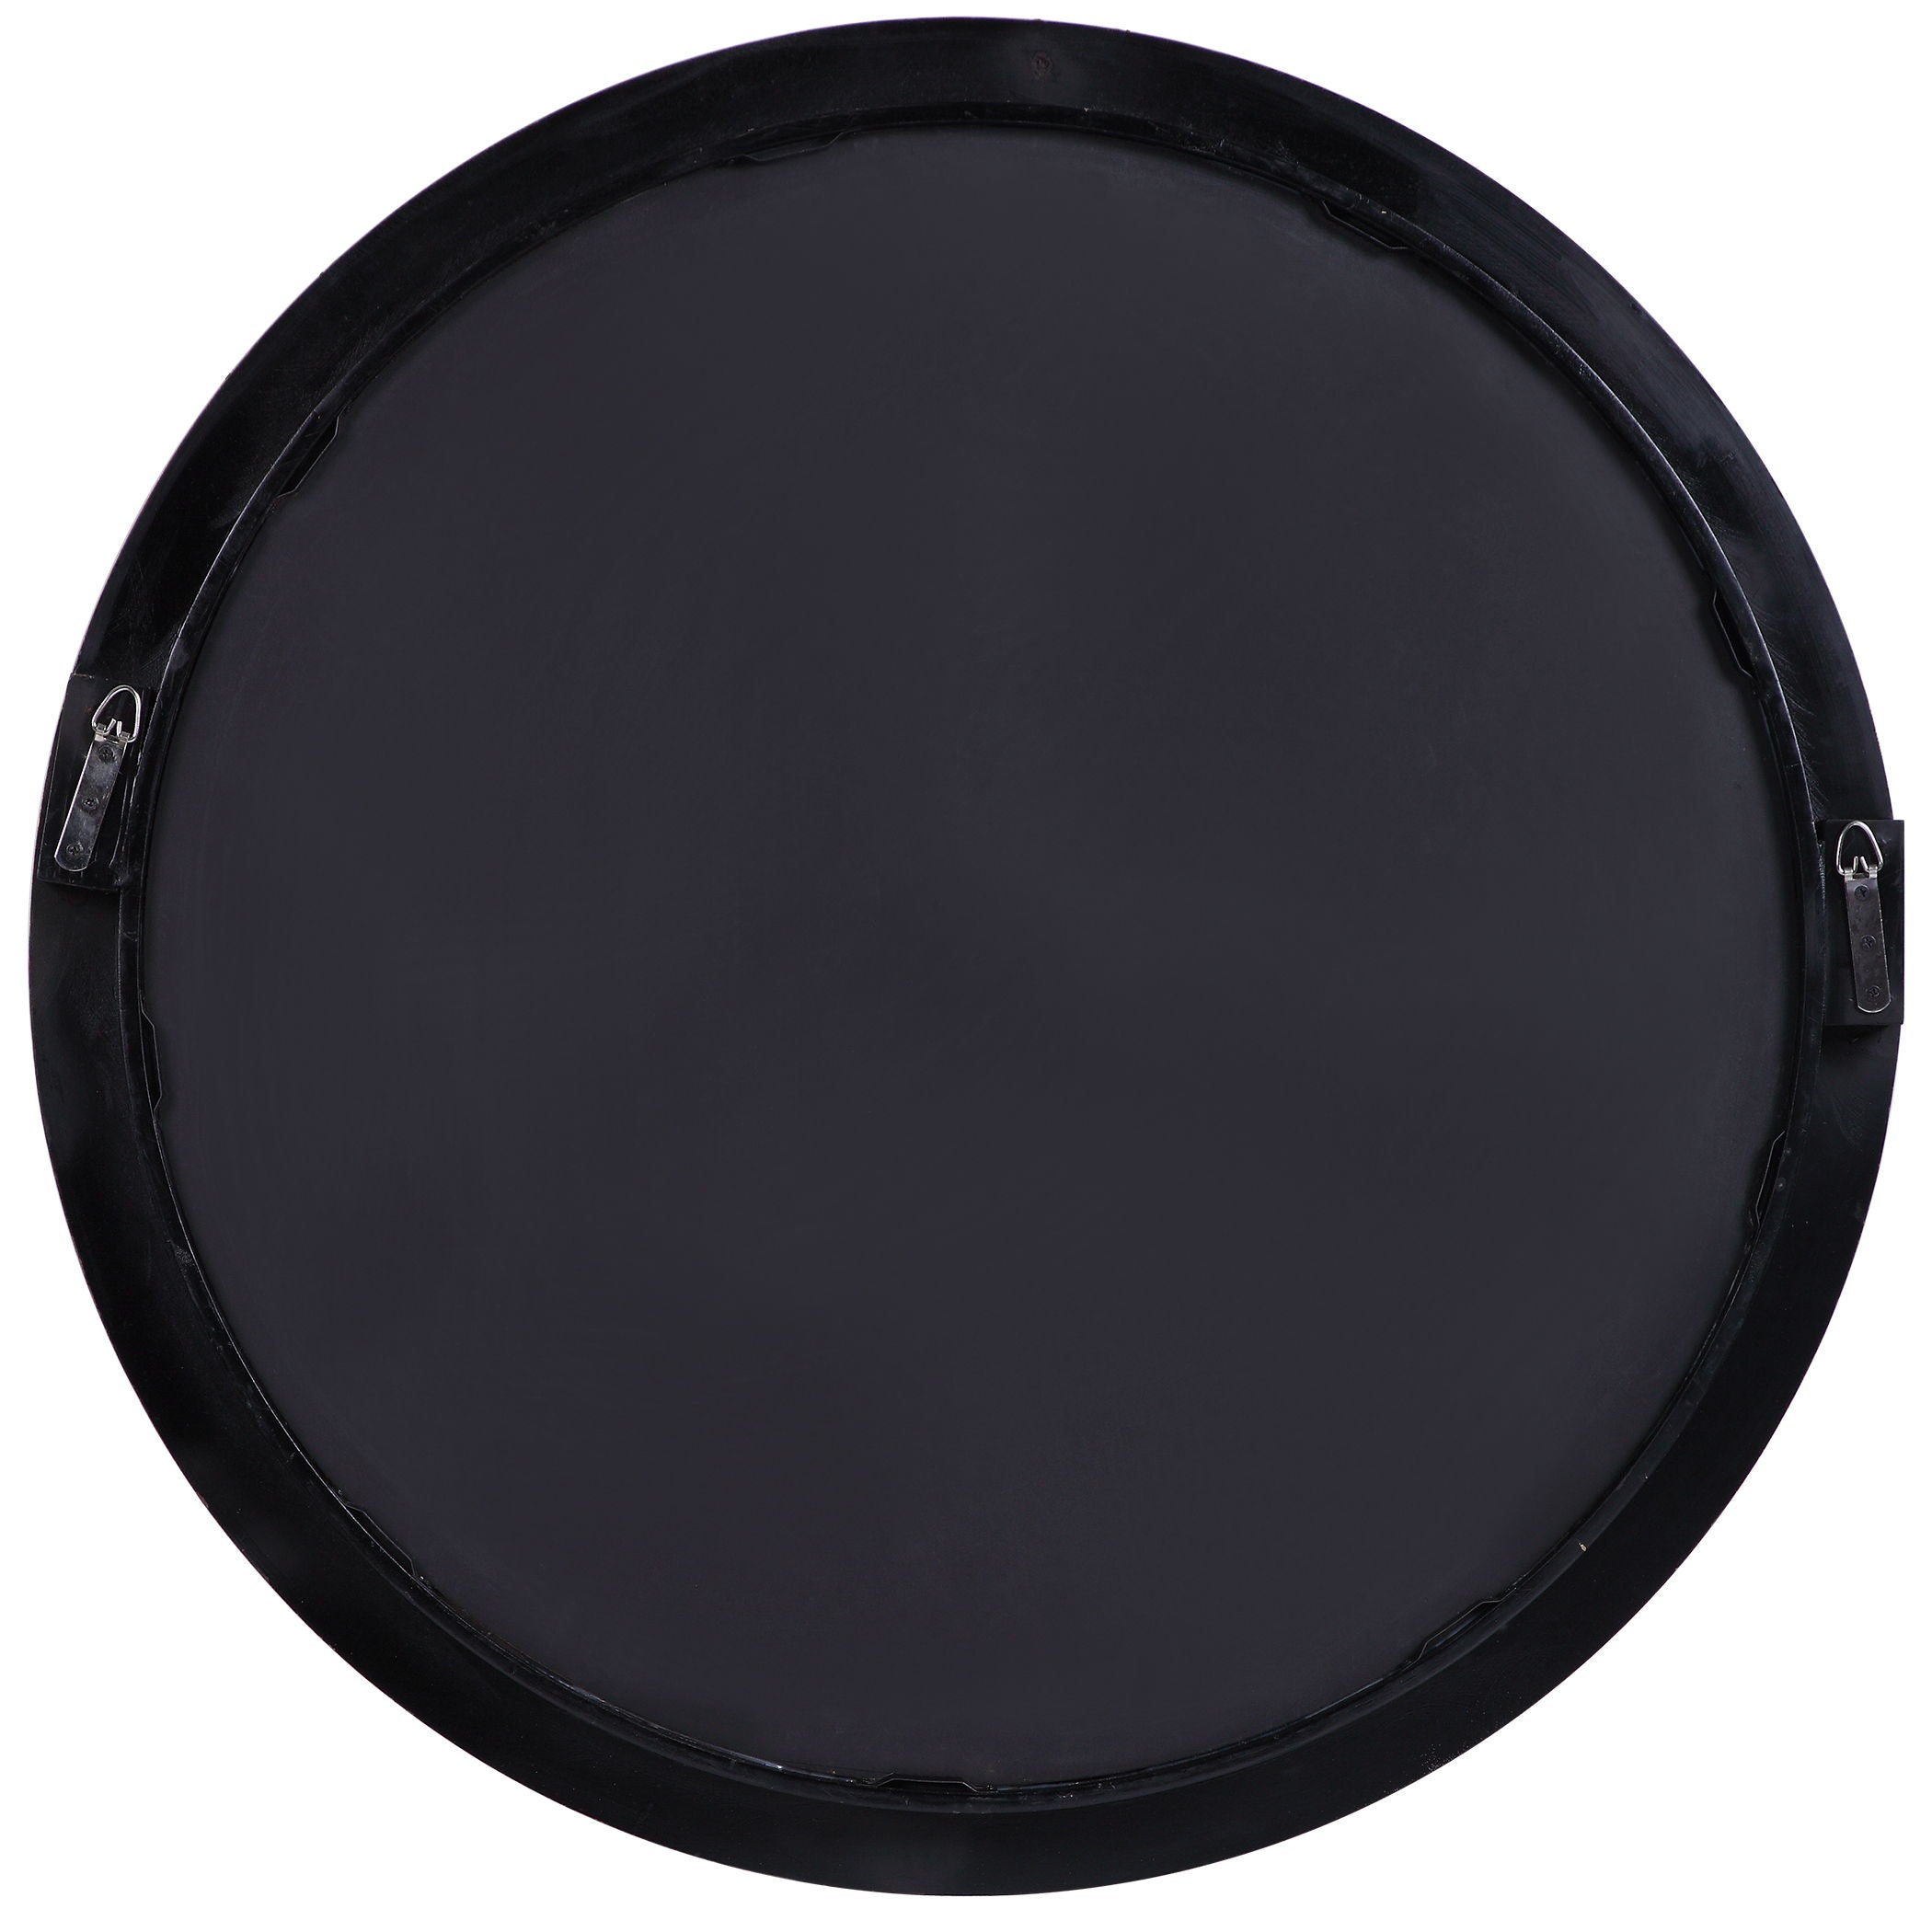 Tull - Industrial Round Mirror - Black